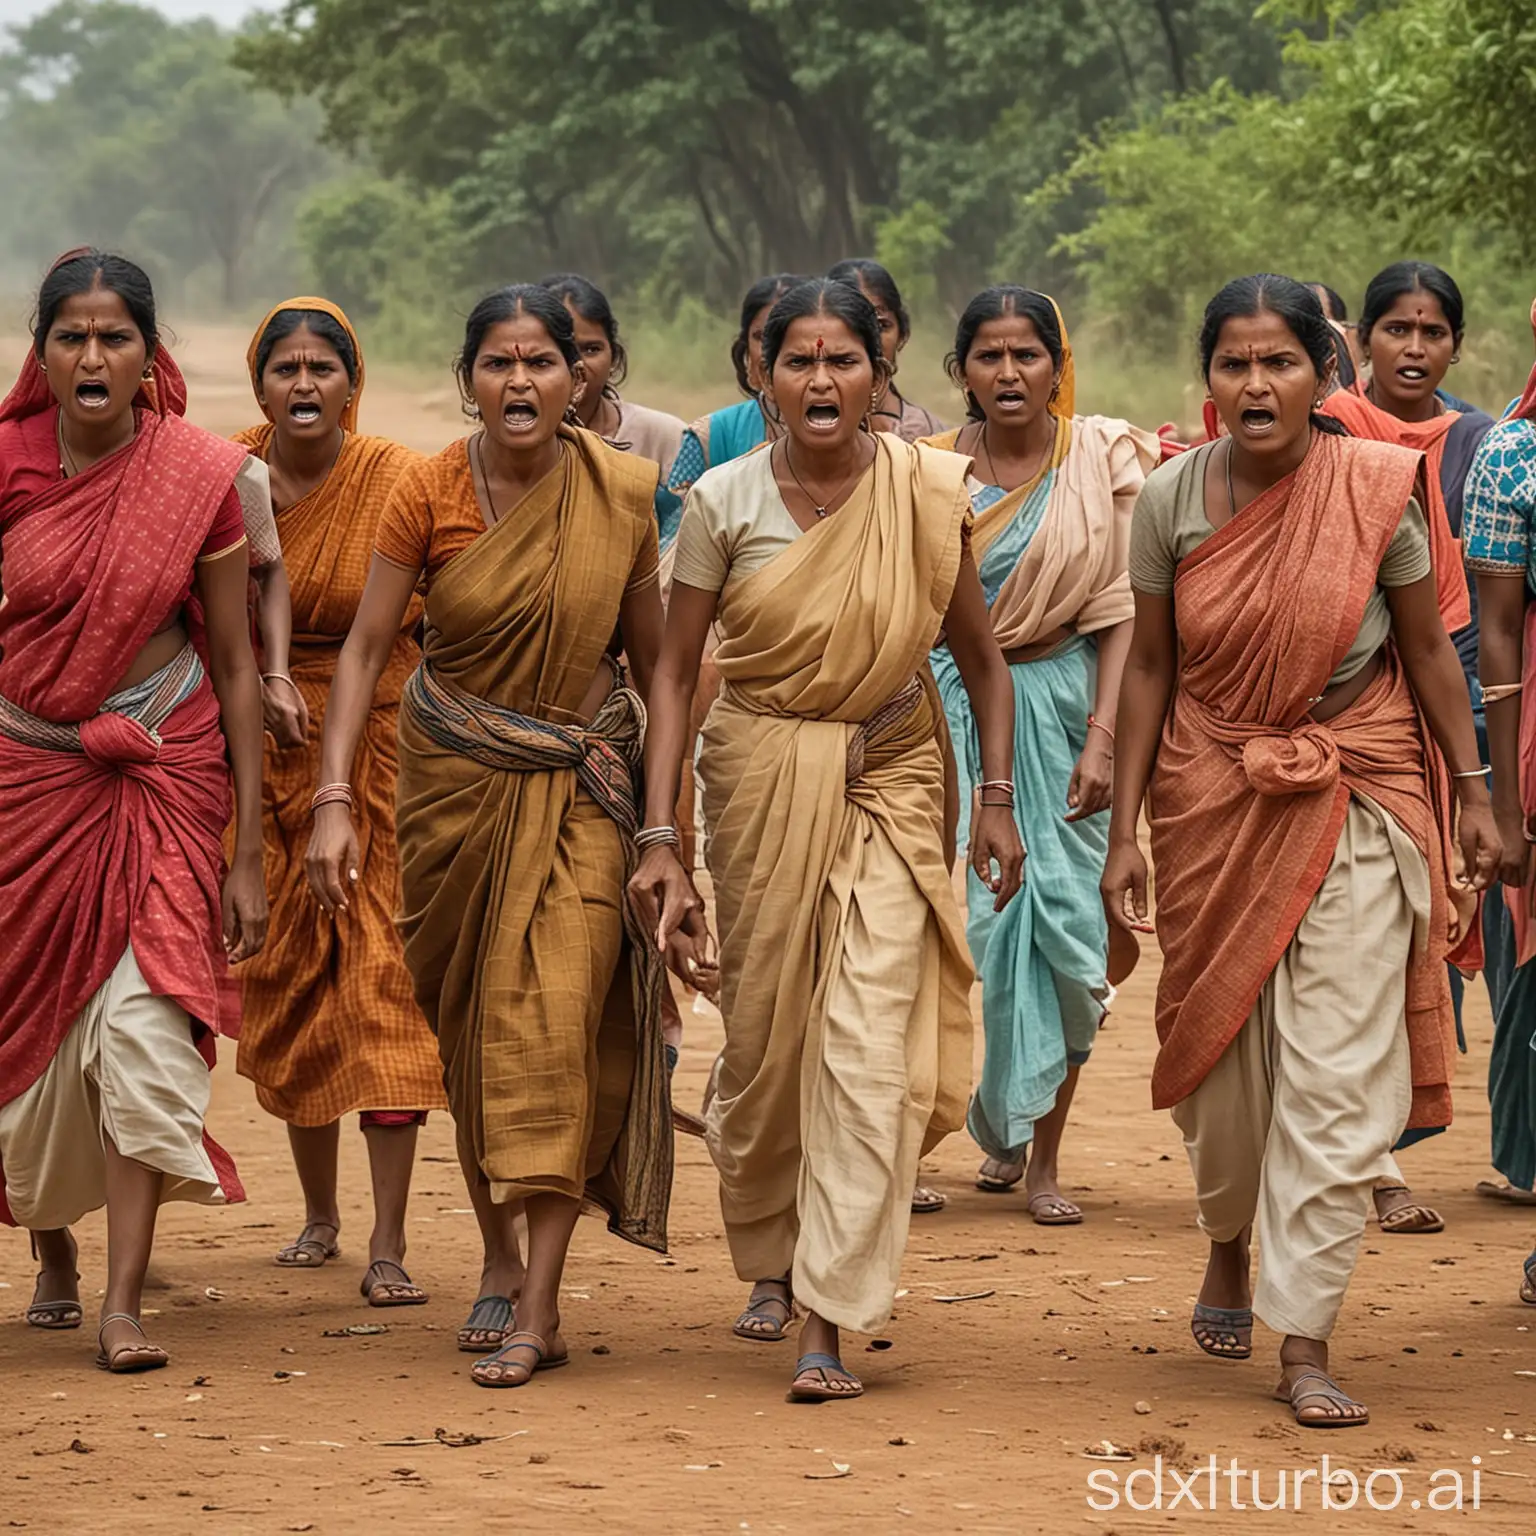 Furious-Indian-Village-Women-Confrontation